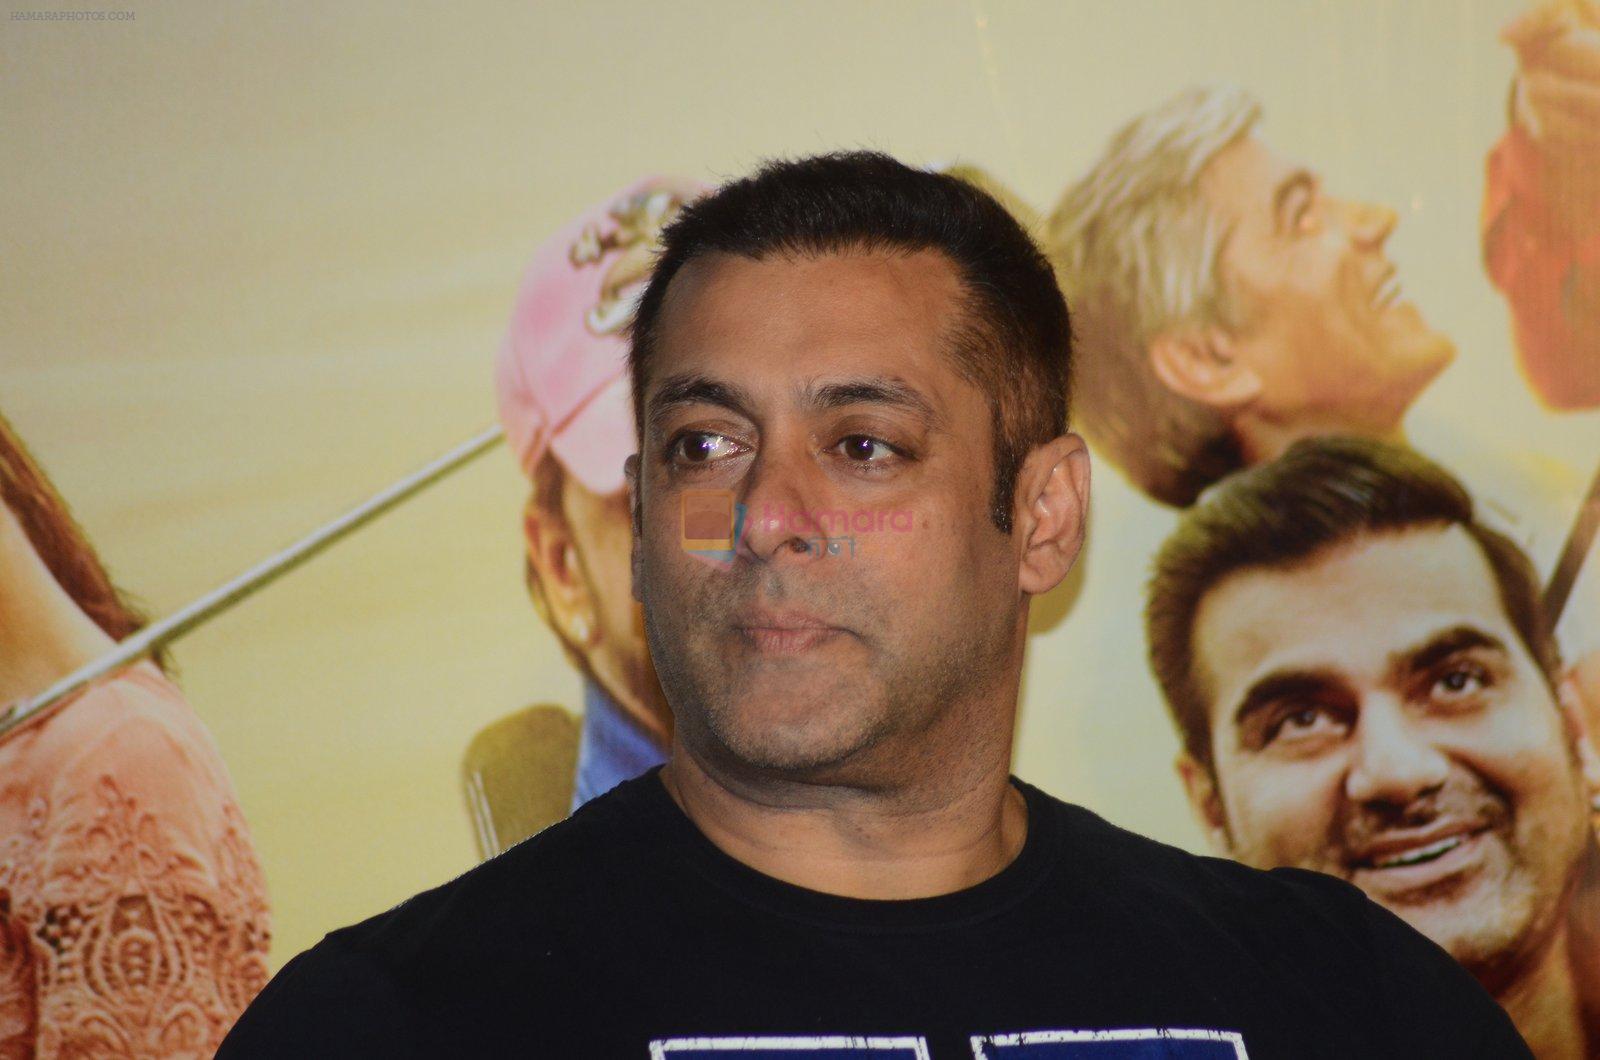 Salman Khan at Freaky Ali trailer launch on 7th Aug 2016